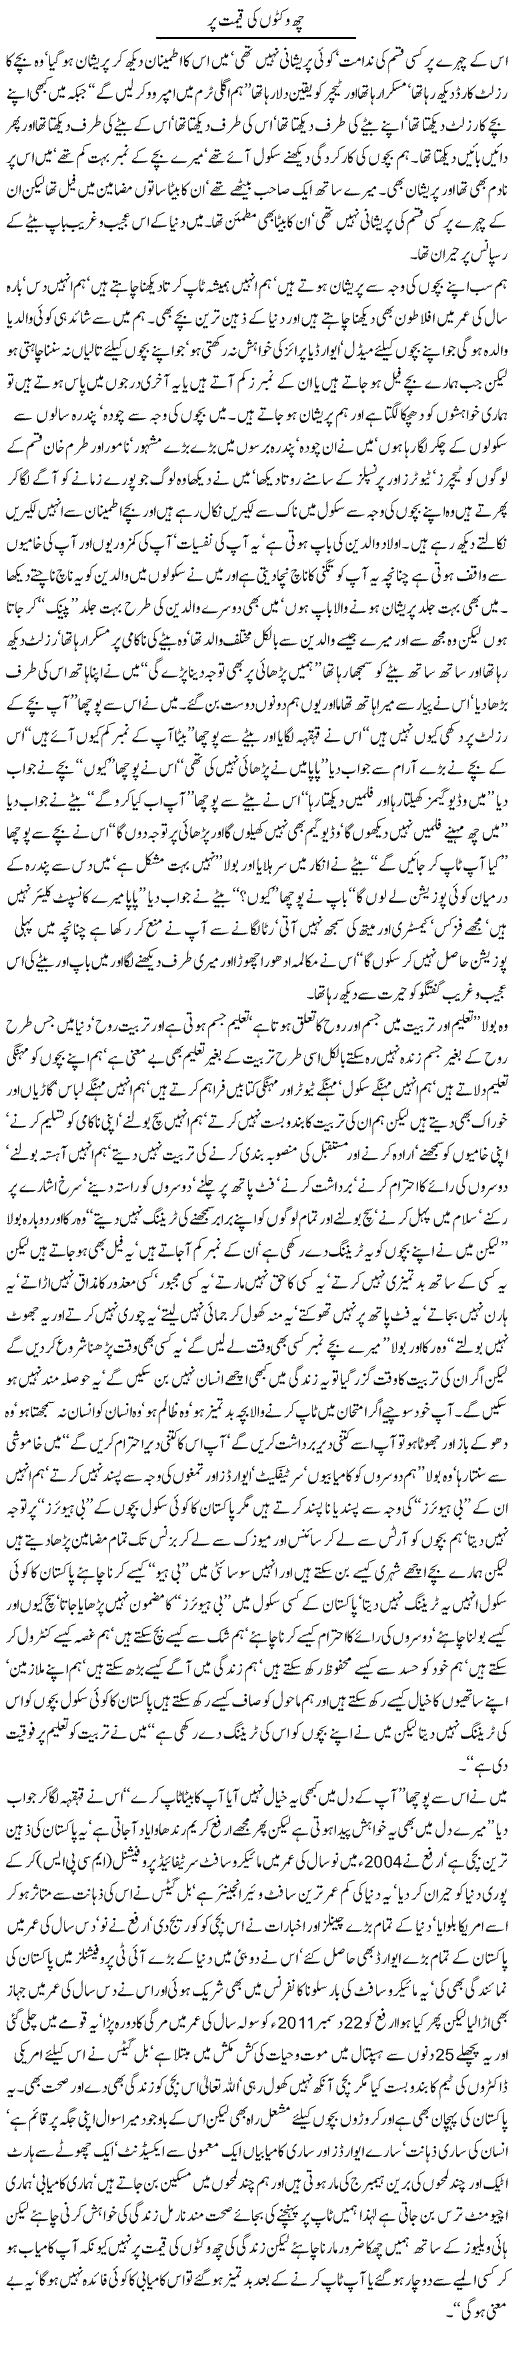 Arfa Karim Express Column Javed Chaudhry 15 January 2012